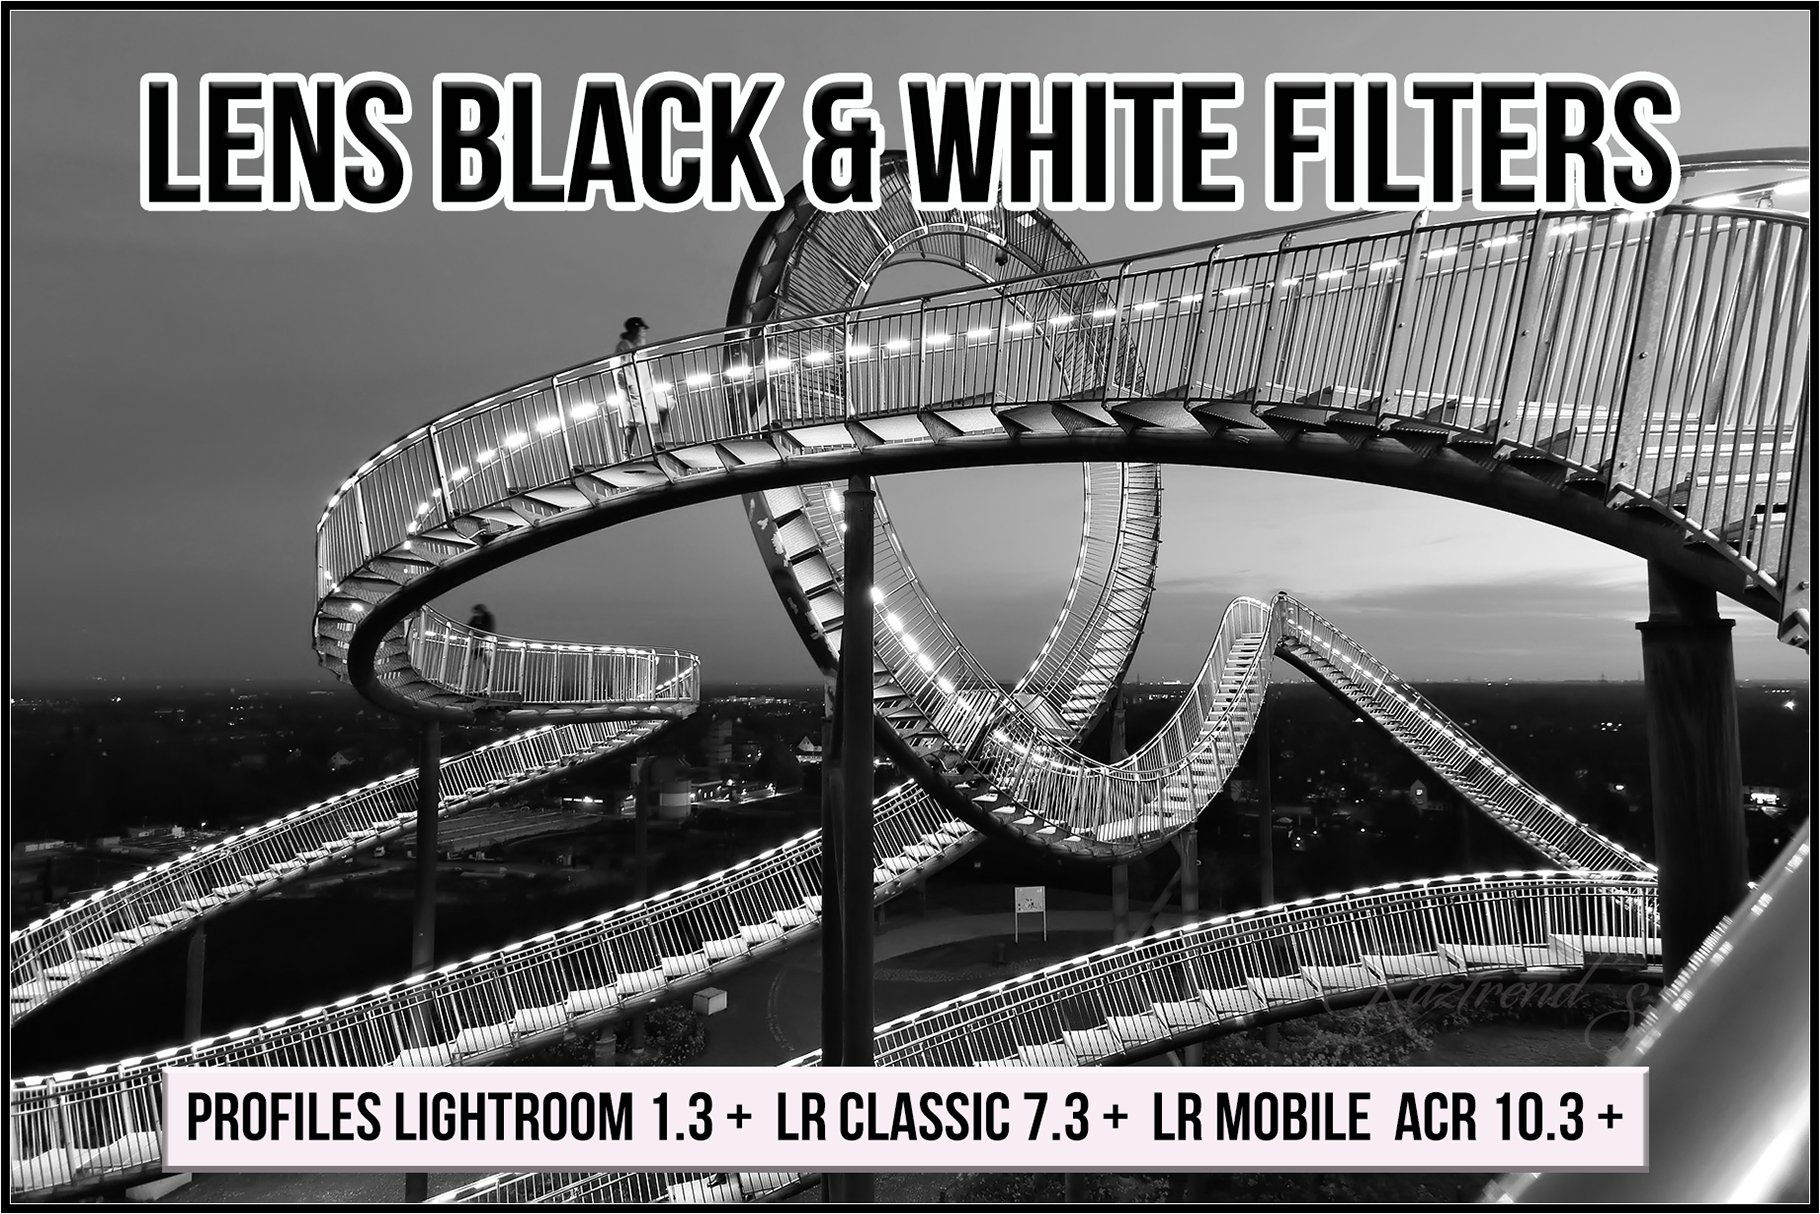 Lens Black & White Filters profilescover image.